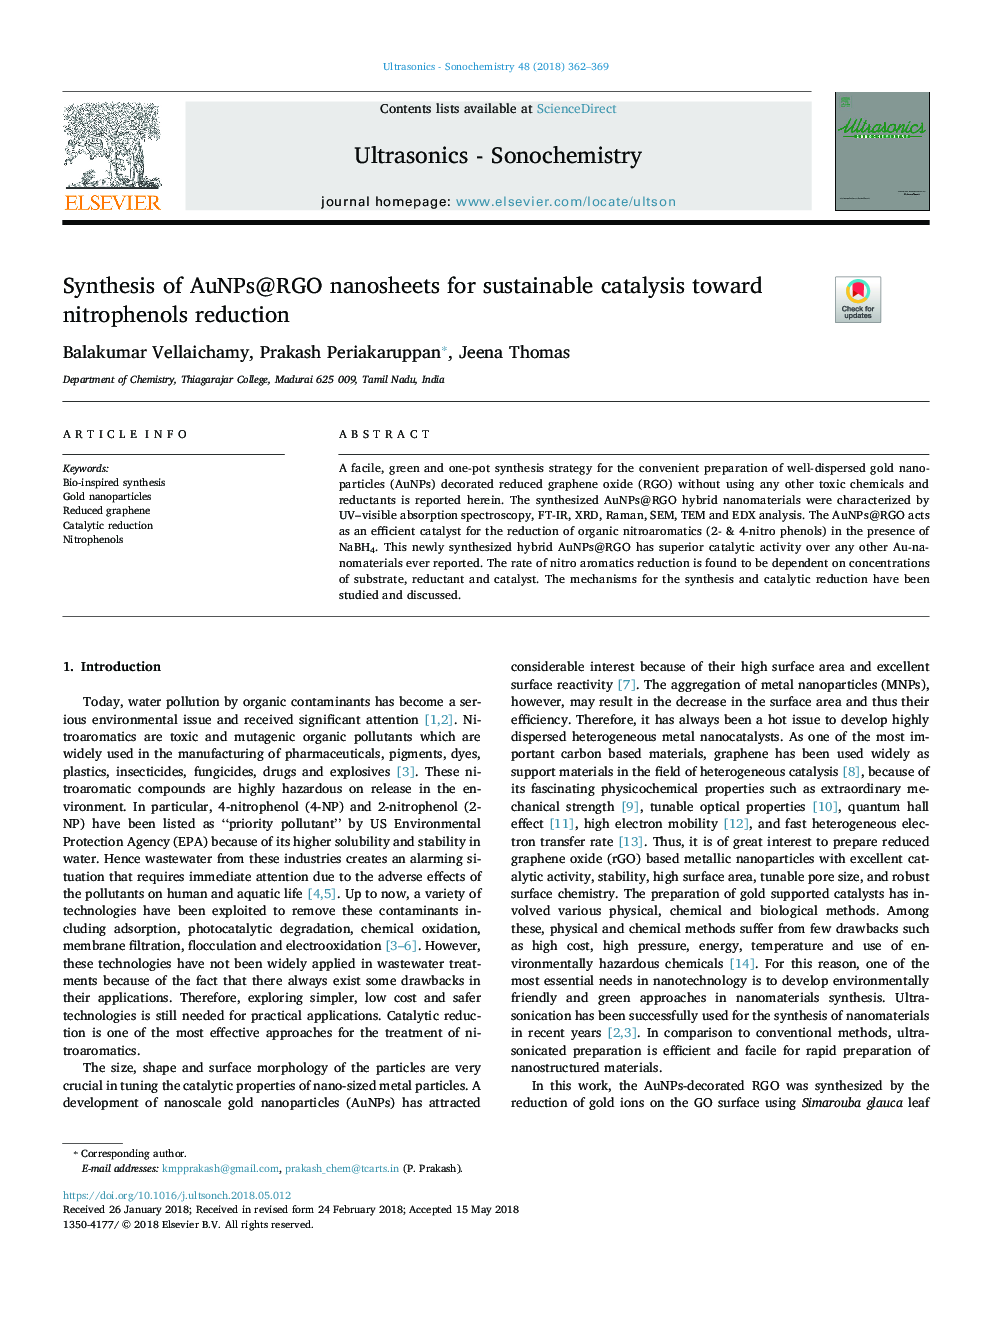 Synthesis of AuNPs@RGO nanosheets for sustainable catalysis toward nitrophenols reduction